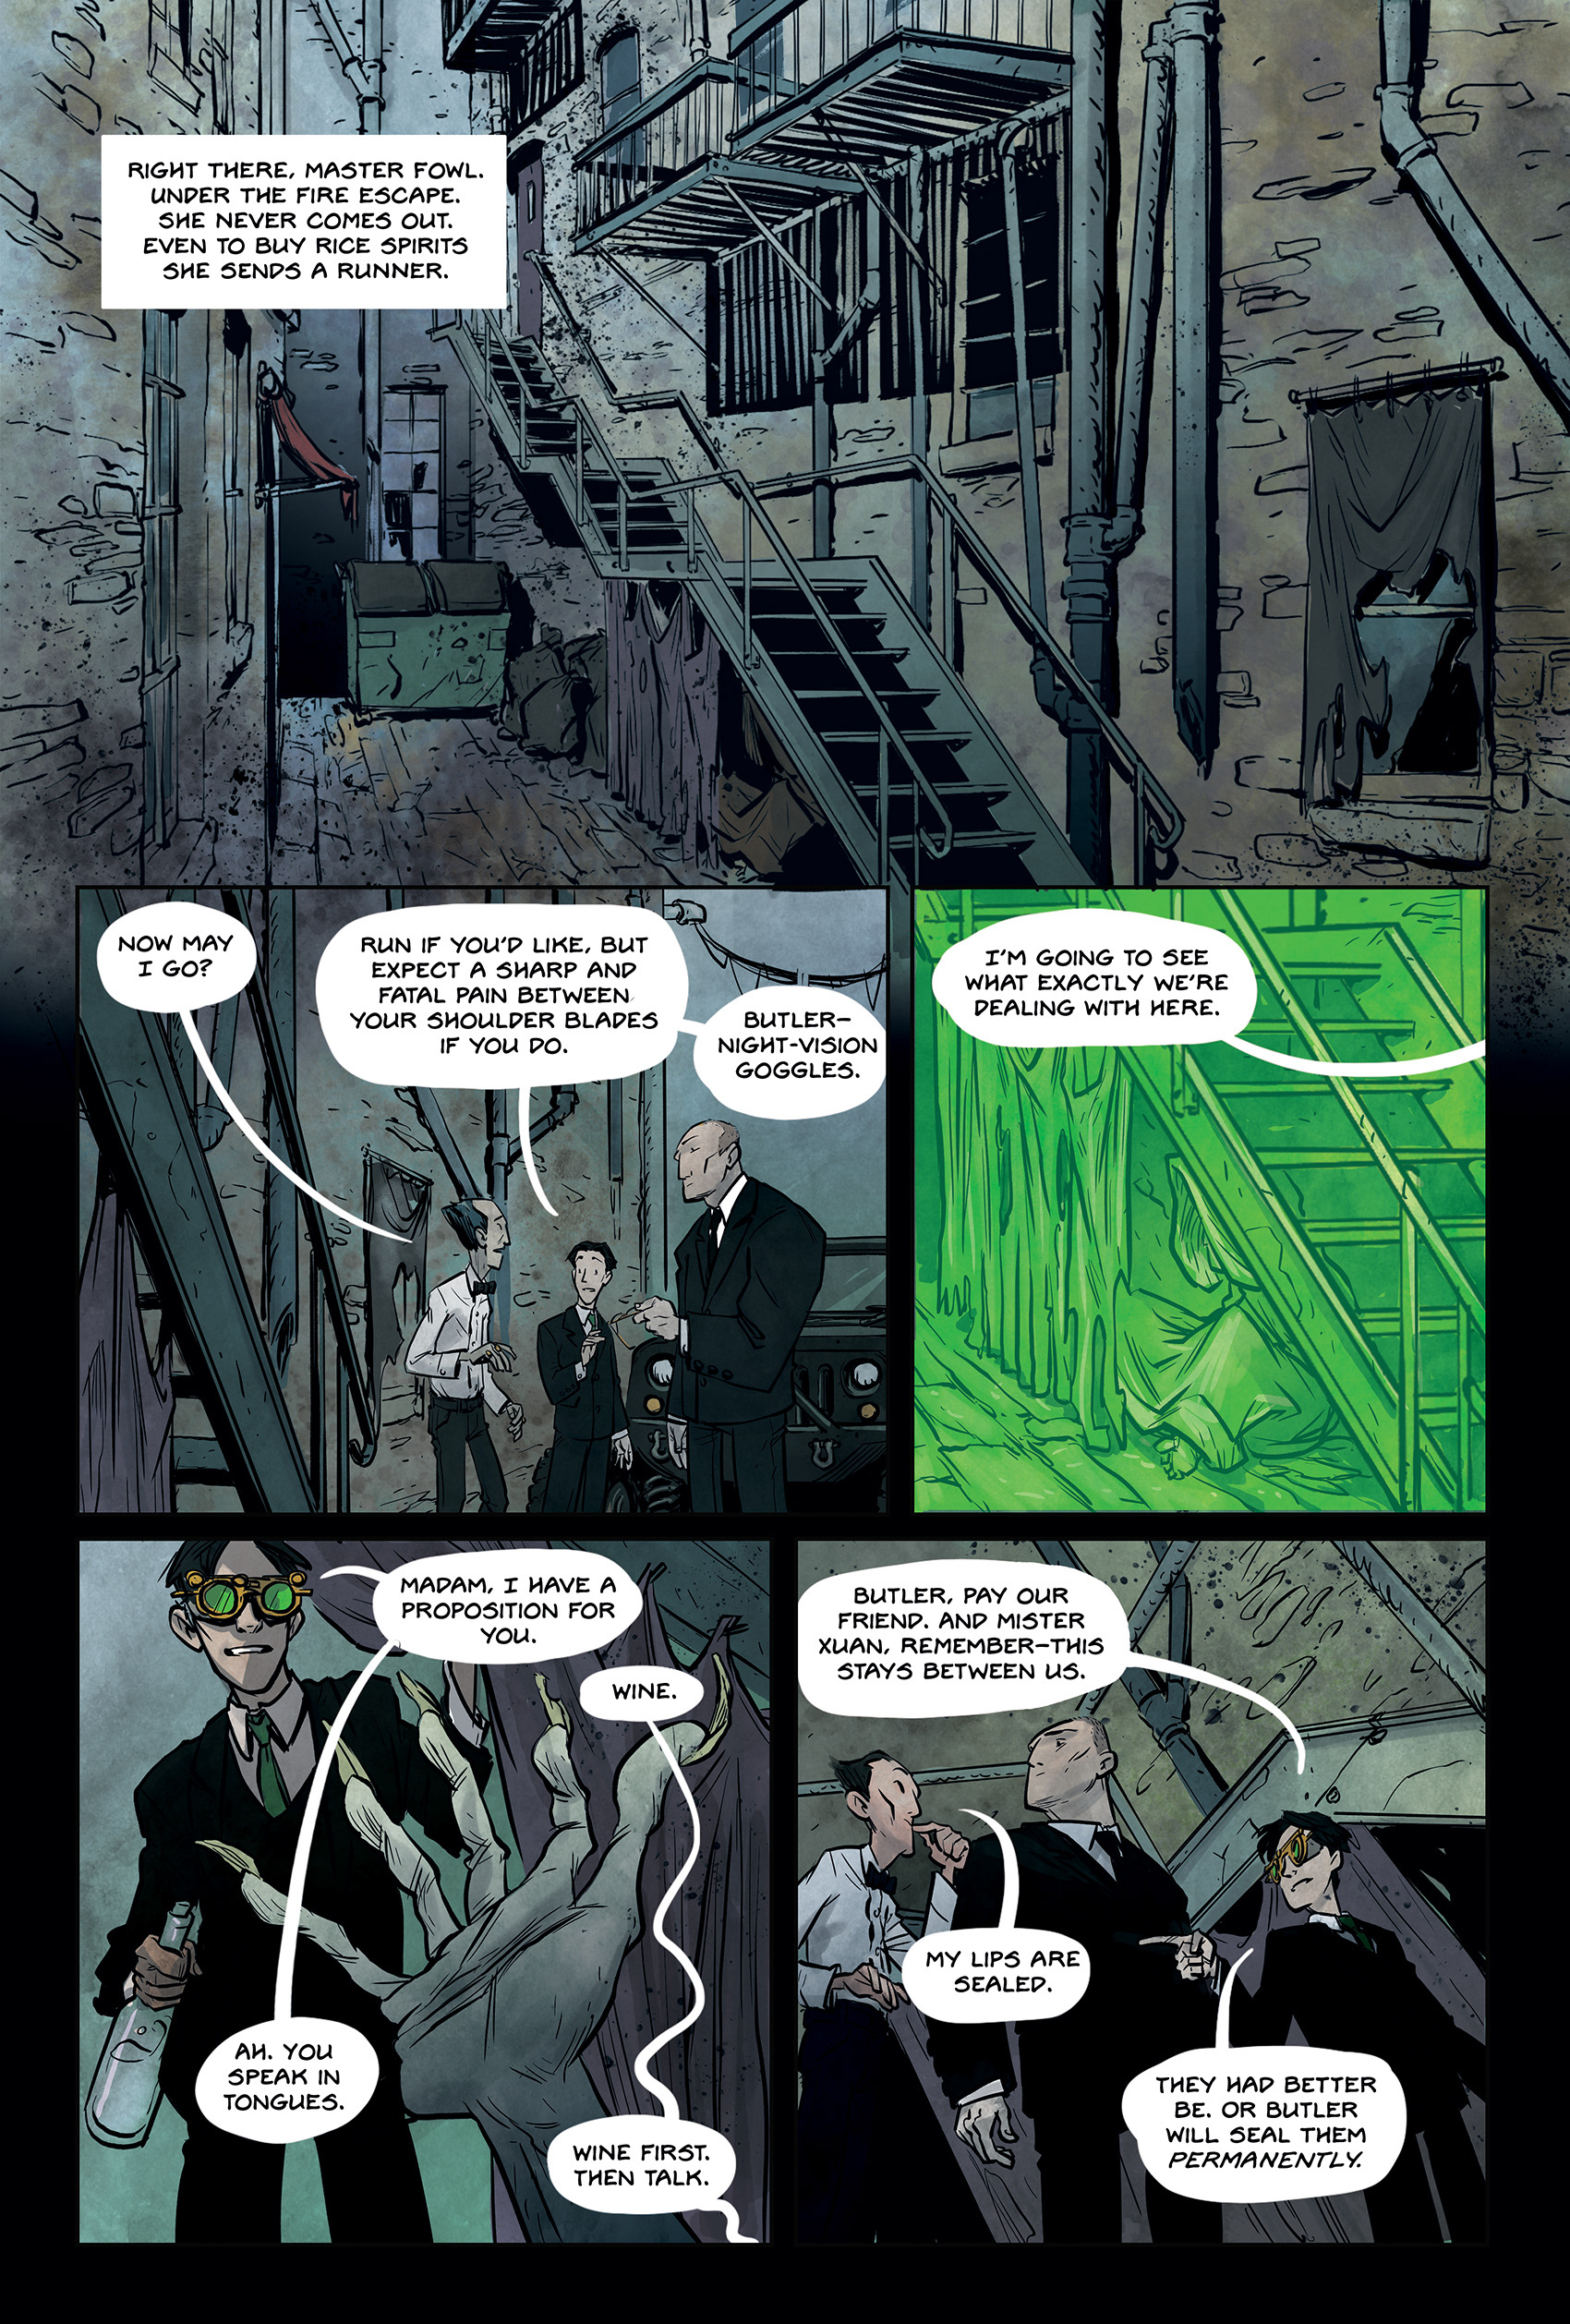 Artemis Fowl: The Graphic Novel Characters - Comic Vine